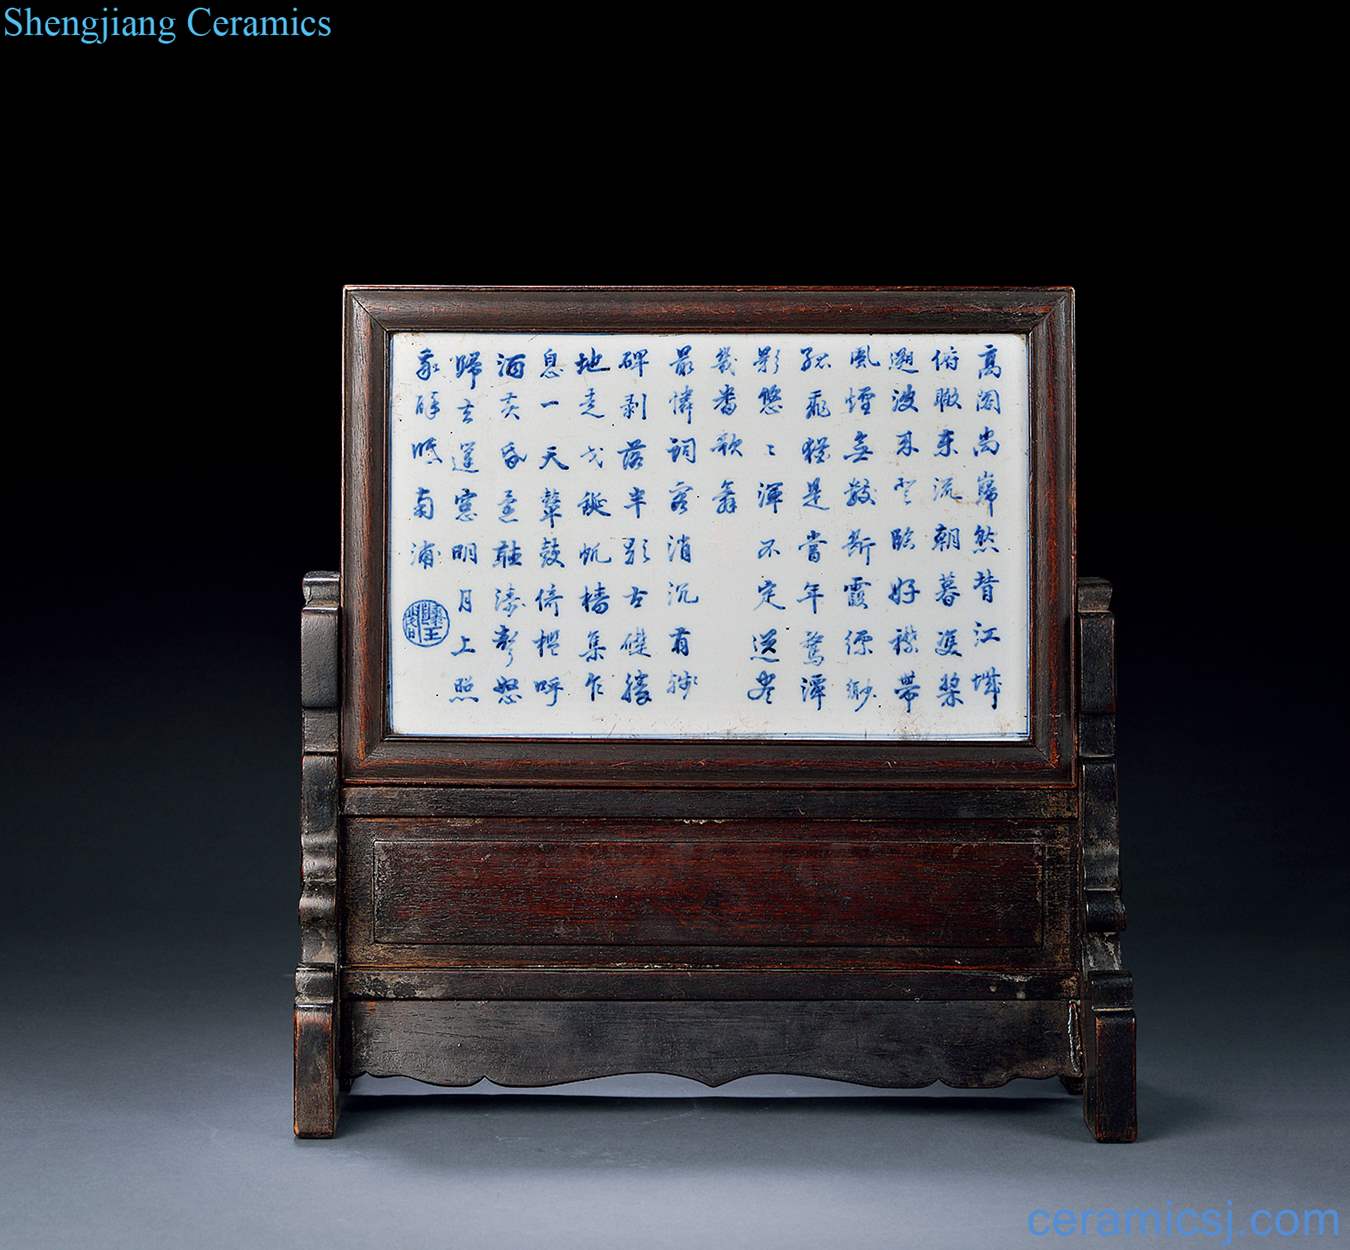 The qing emperor kangxi Blue and white tengwang pavilion preface plaque